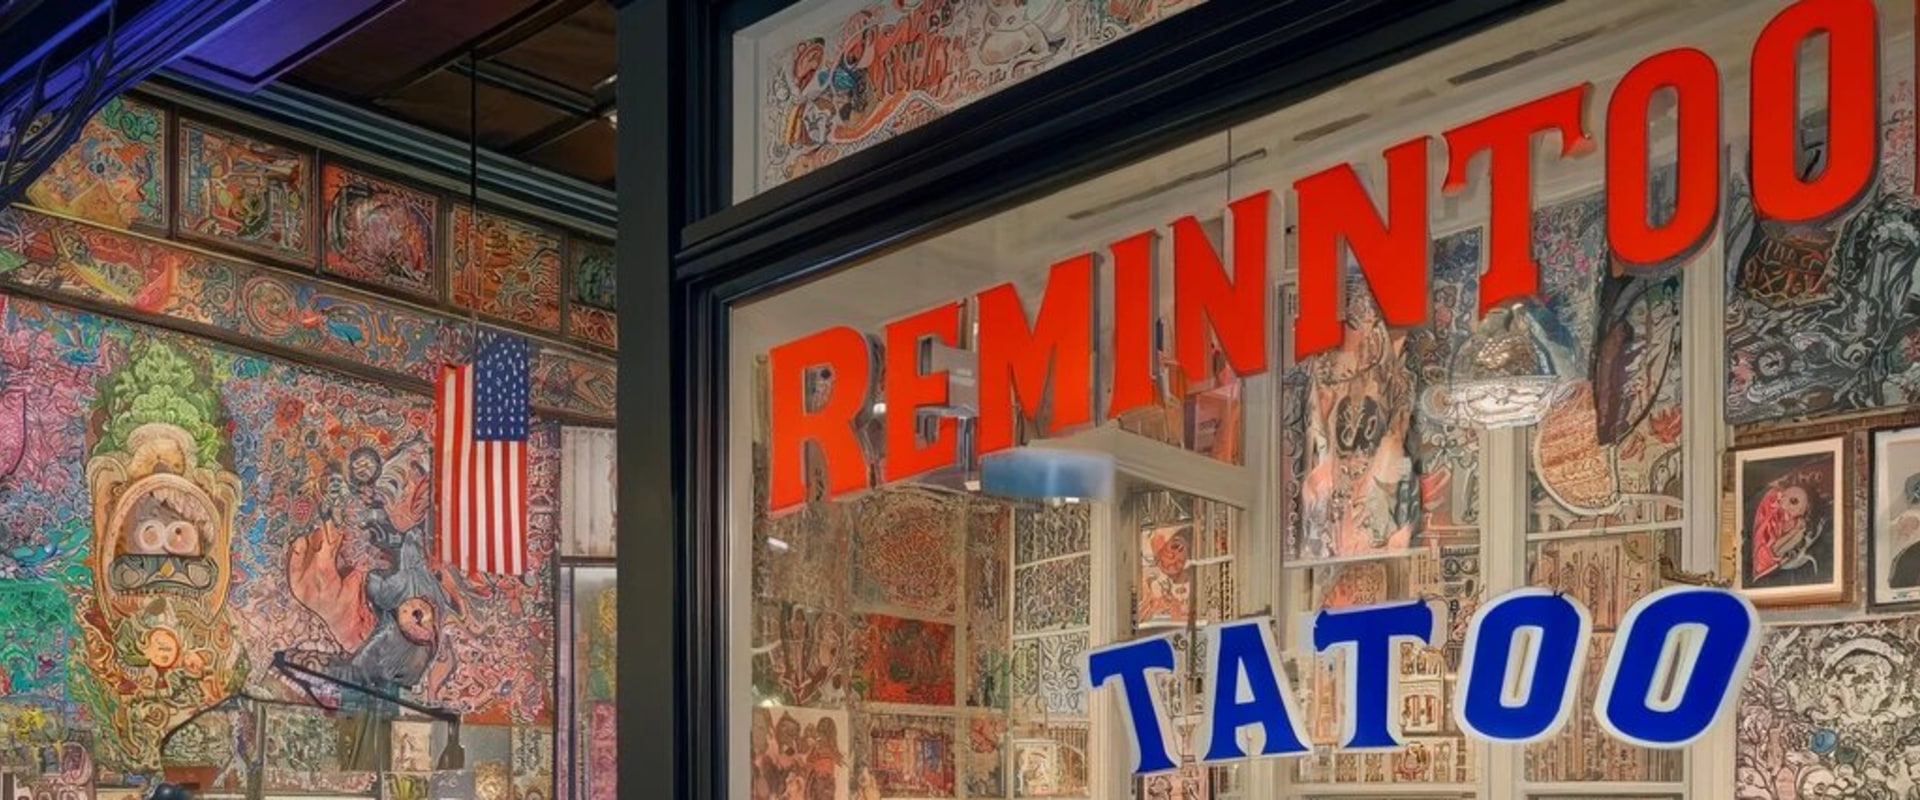 Remington Tattoo Shines in Indiana News Spotlight